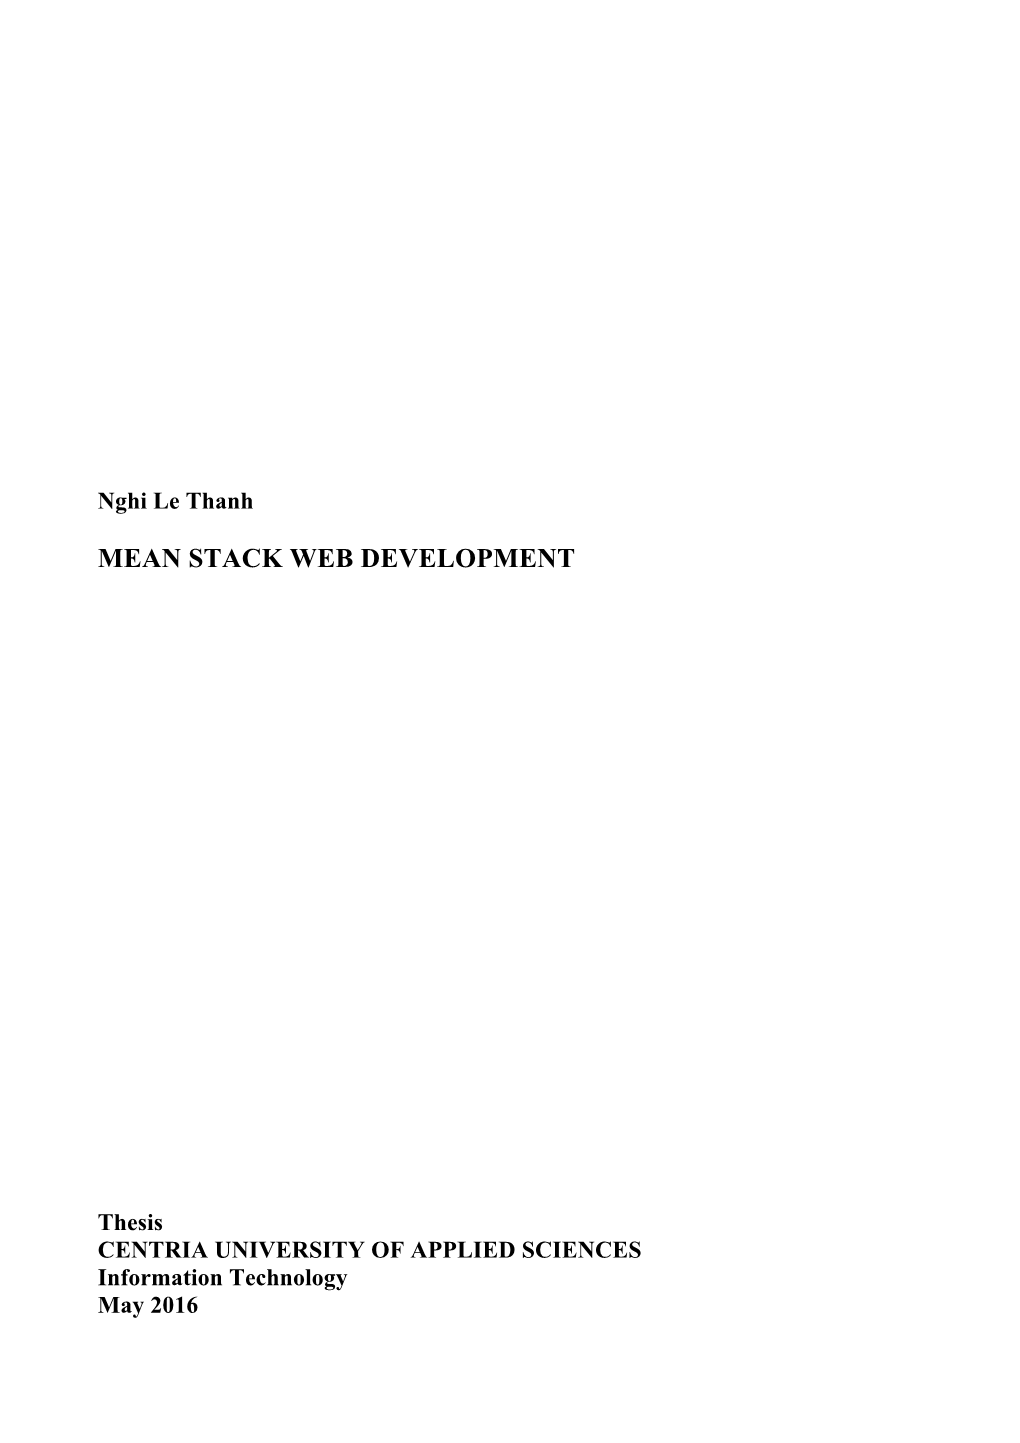 Mean Stack Web Development